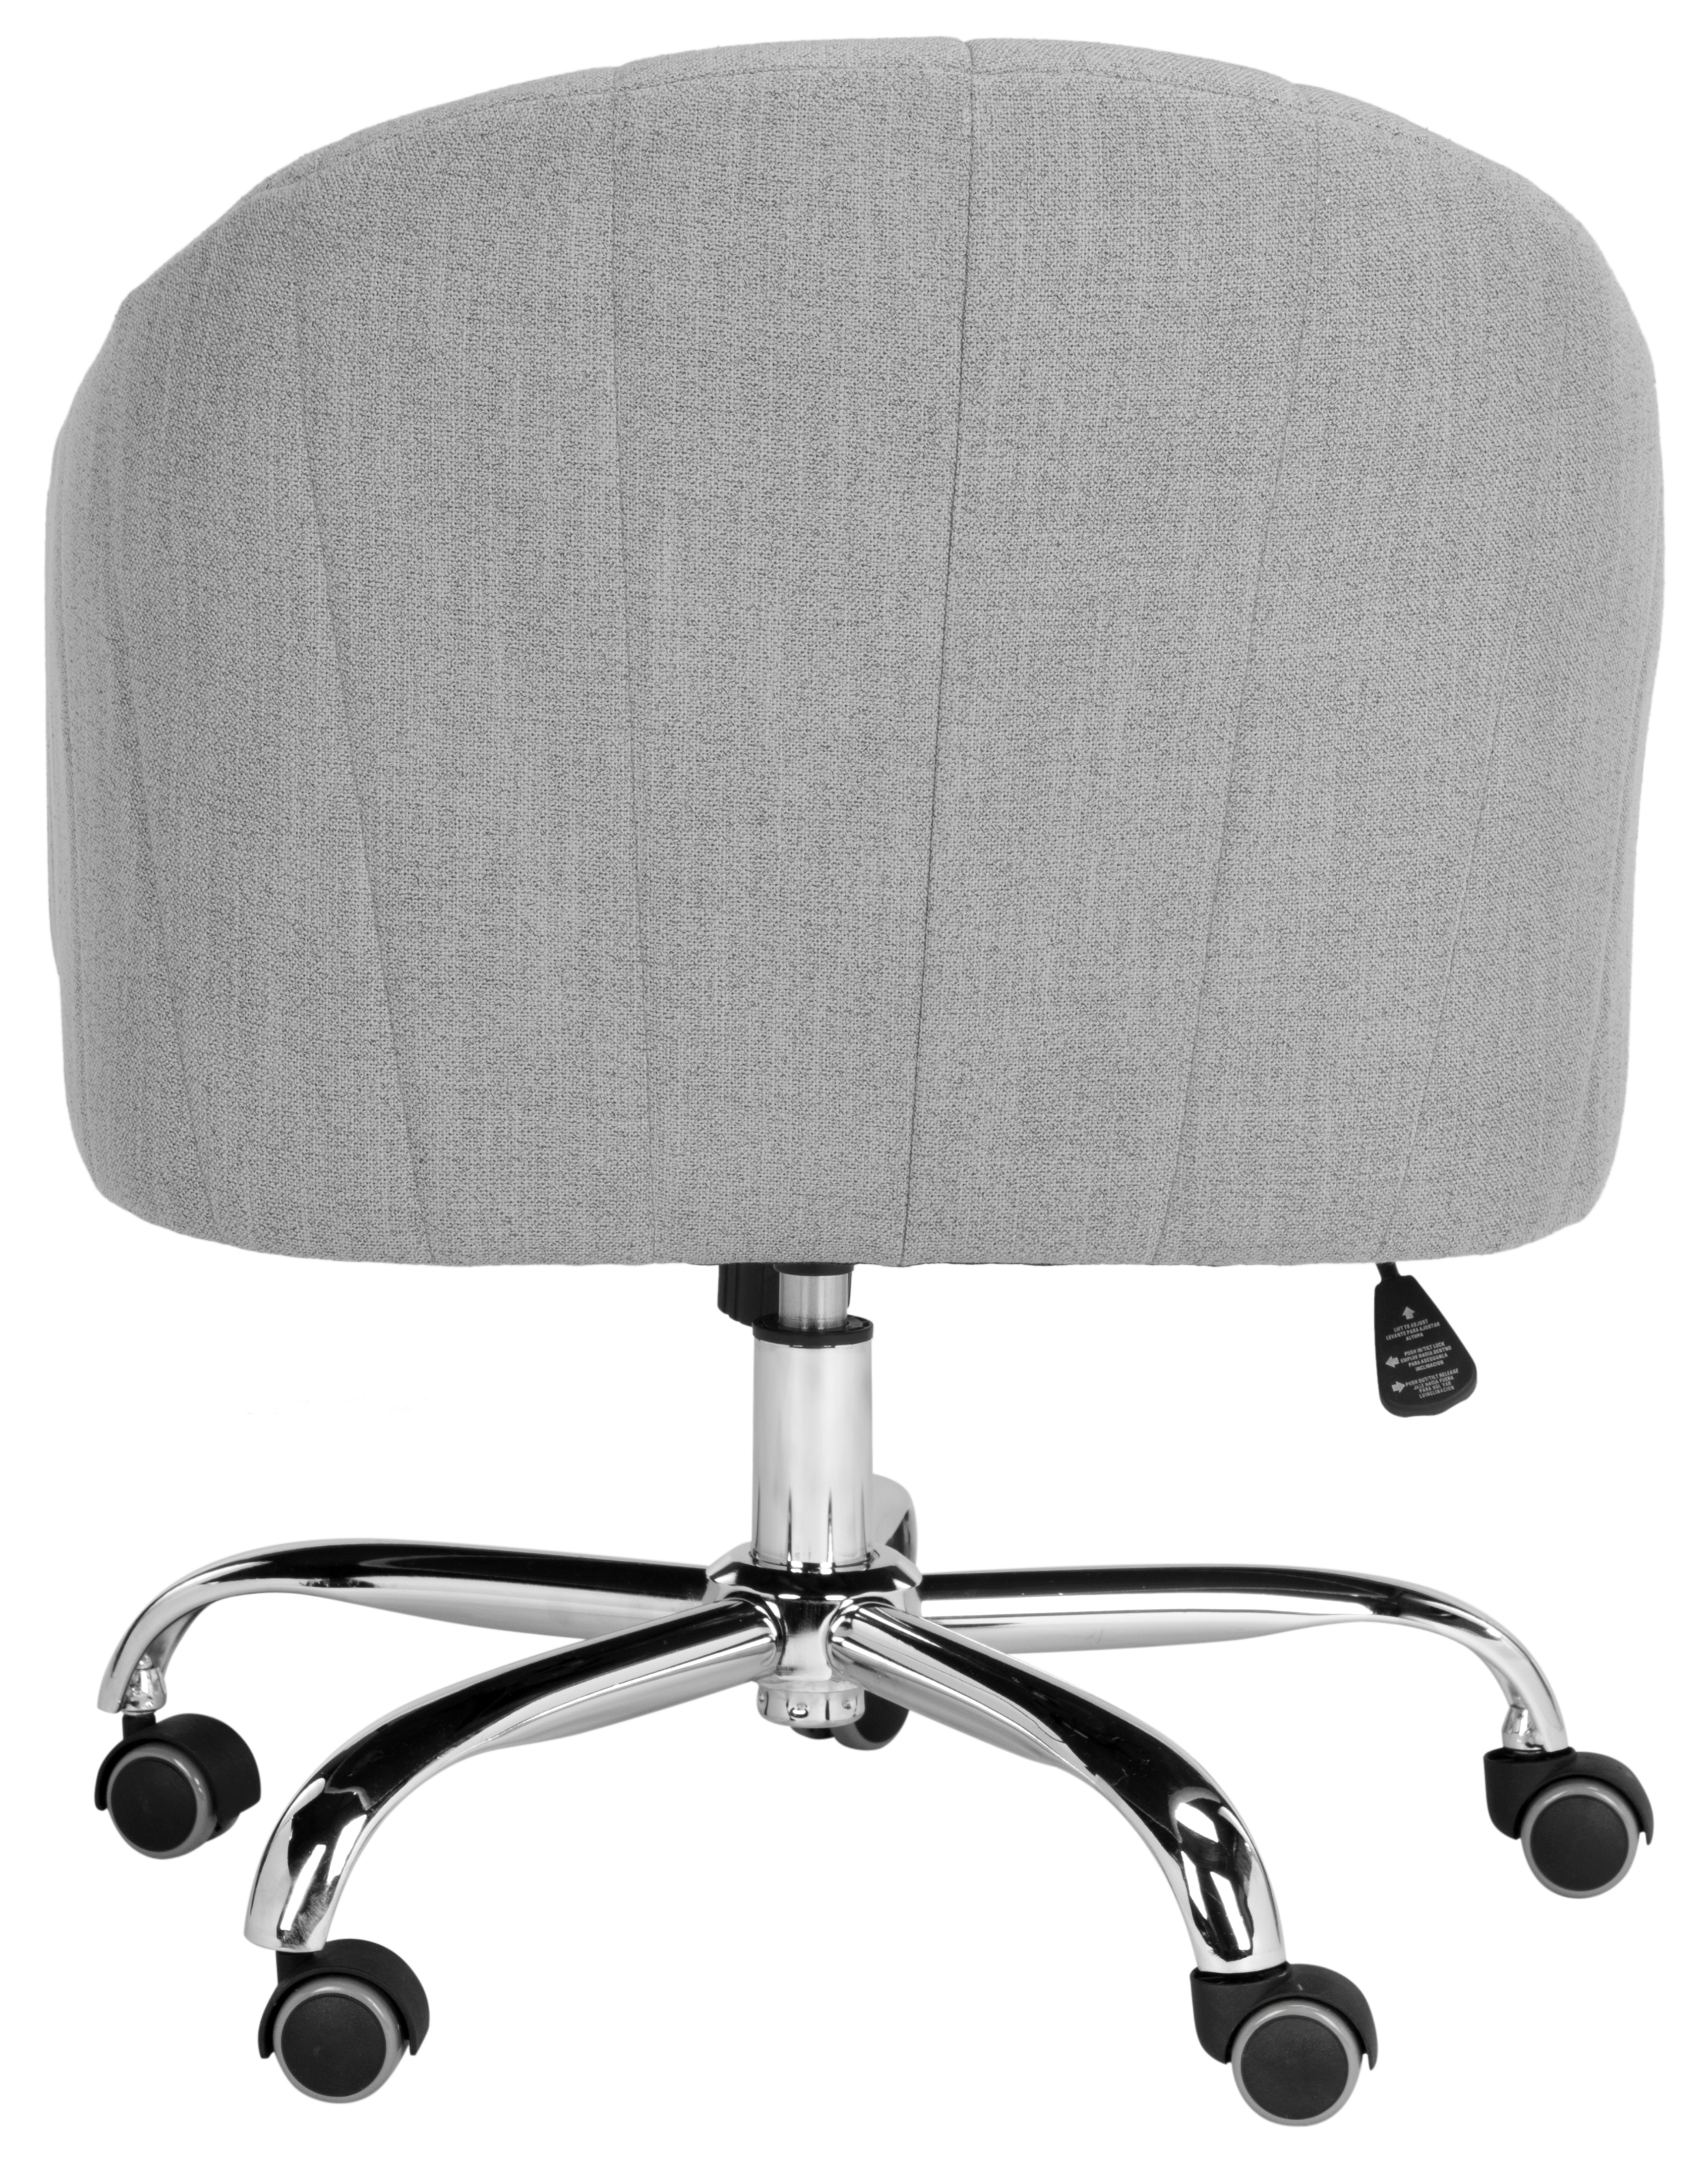 Themis Linen Chrome Leg Swivel Office Chair - Grey/Chrome - Arlo Home - Image 3